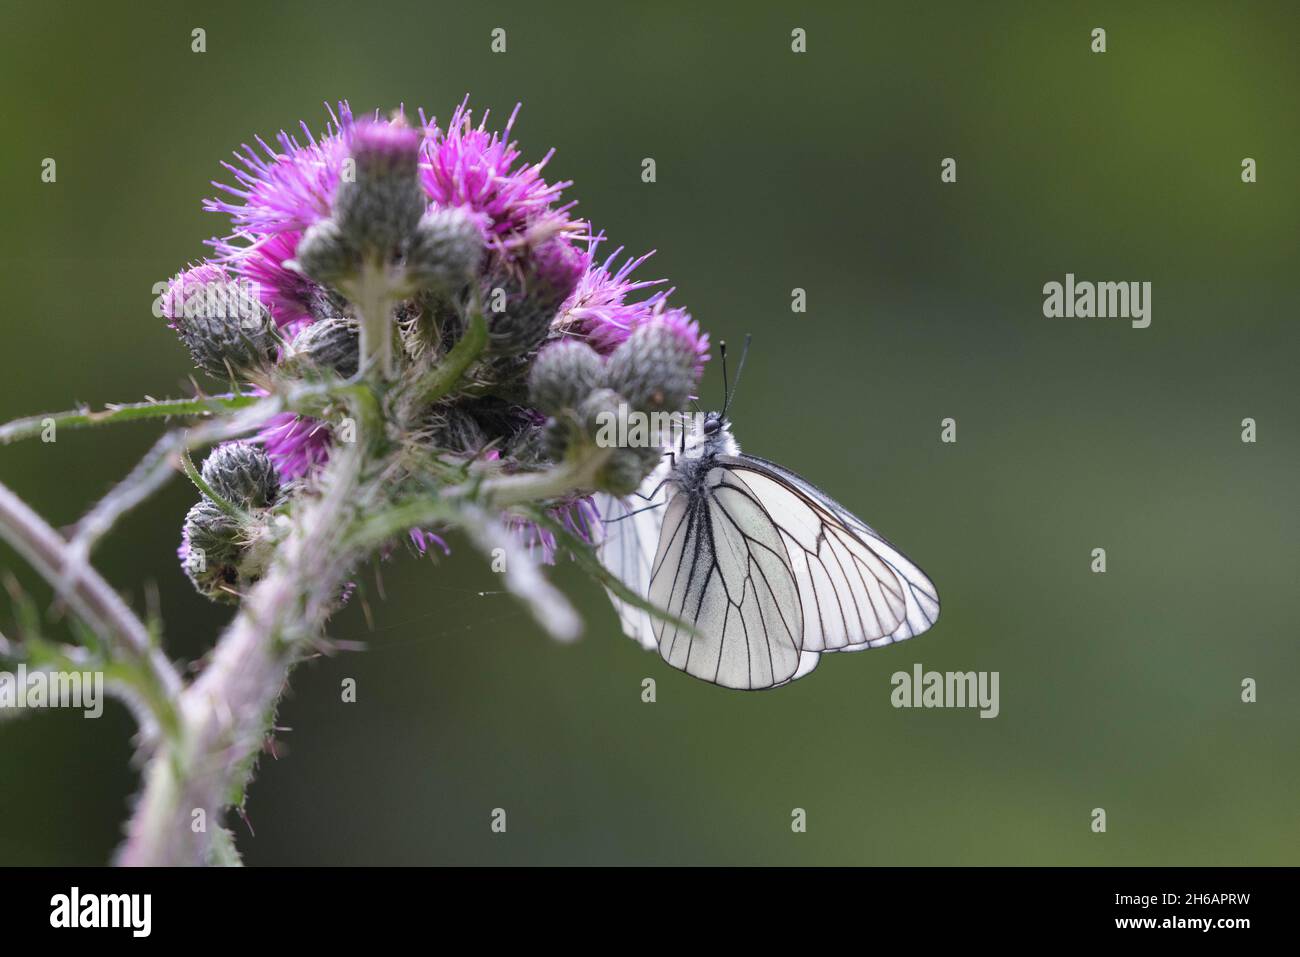 Aporia crataegi, the black-veined white butterfly on thistle Stock Photo